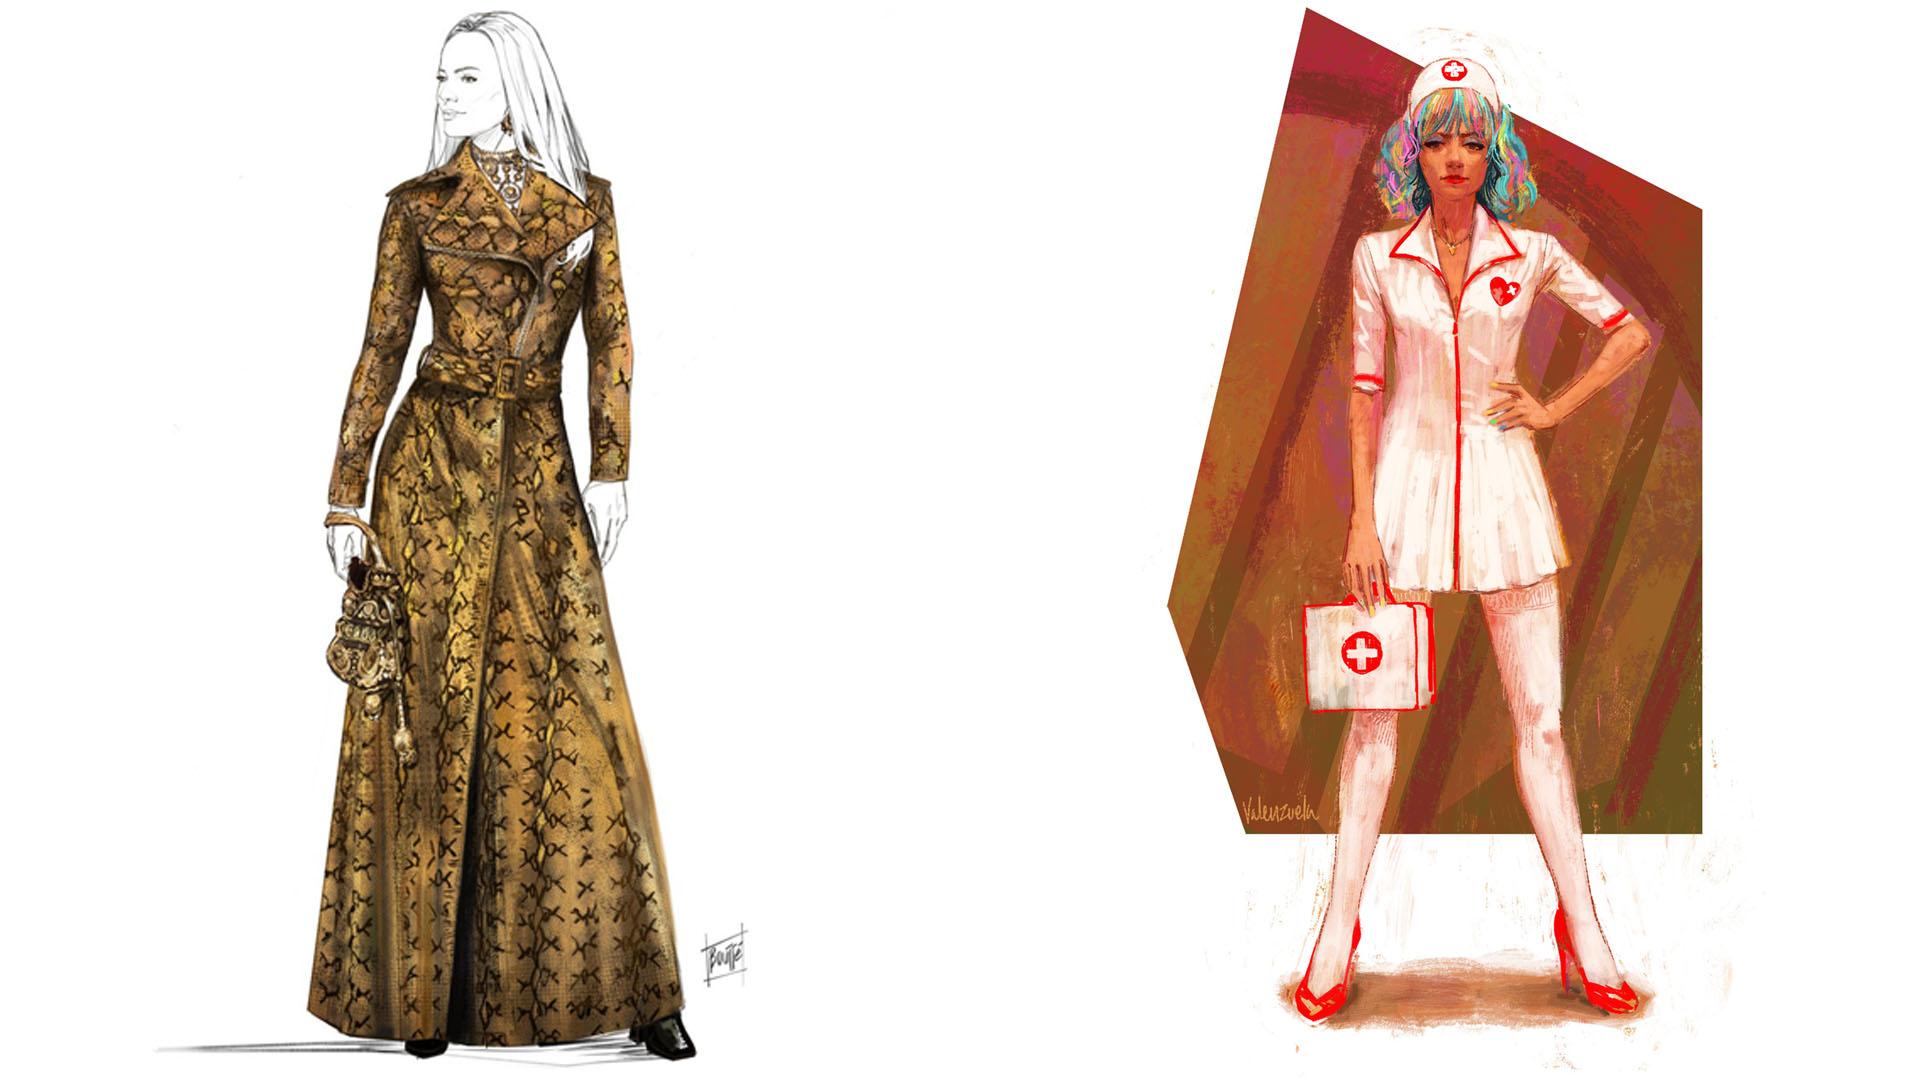 Left: Costume design by Phillip Boutte Jr. Right: Costume design by Brian Valenzuela.